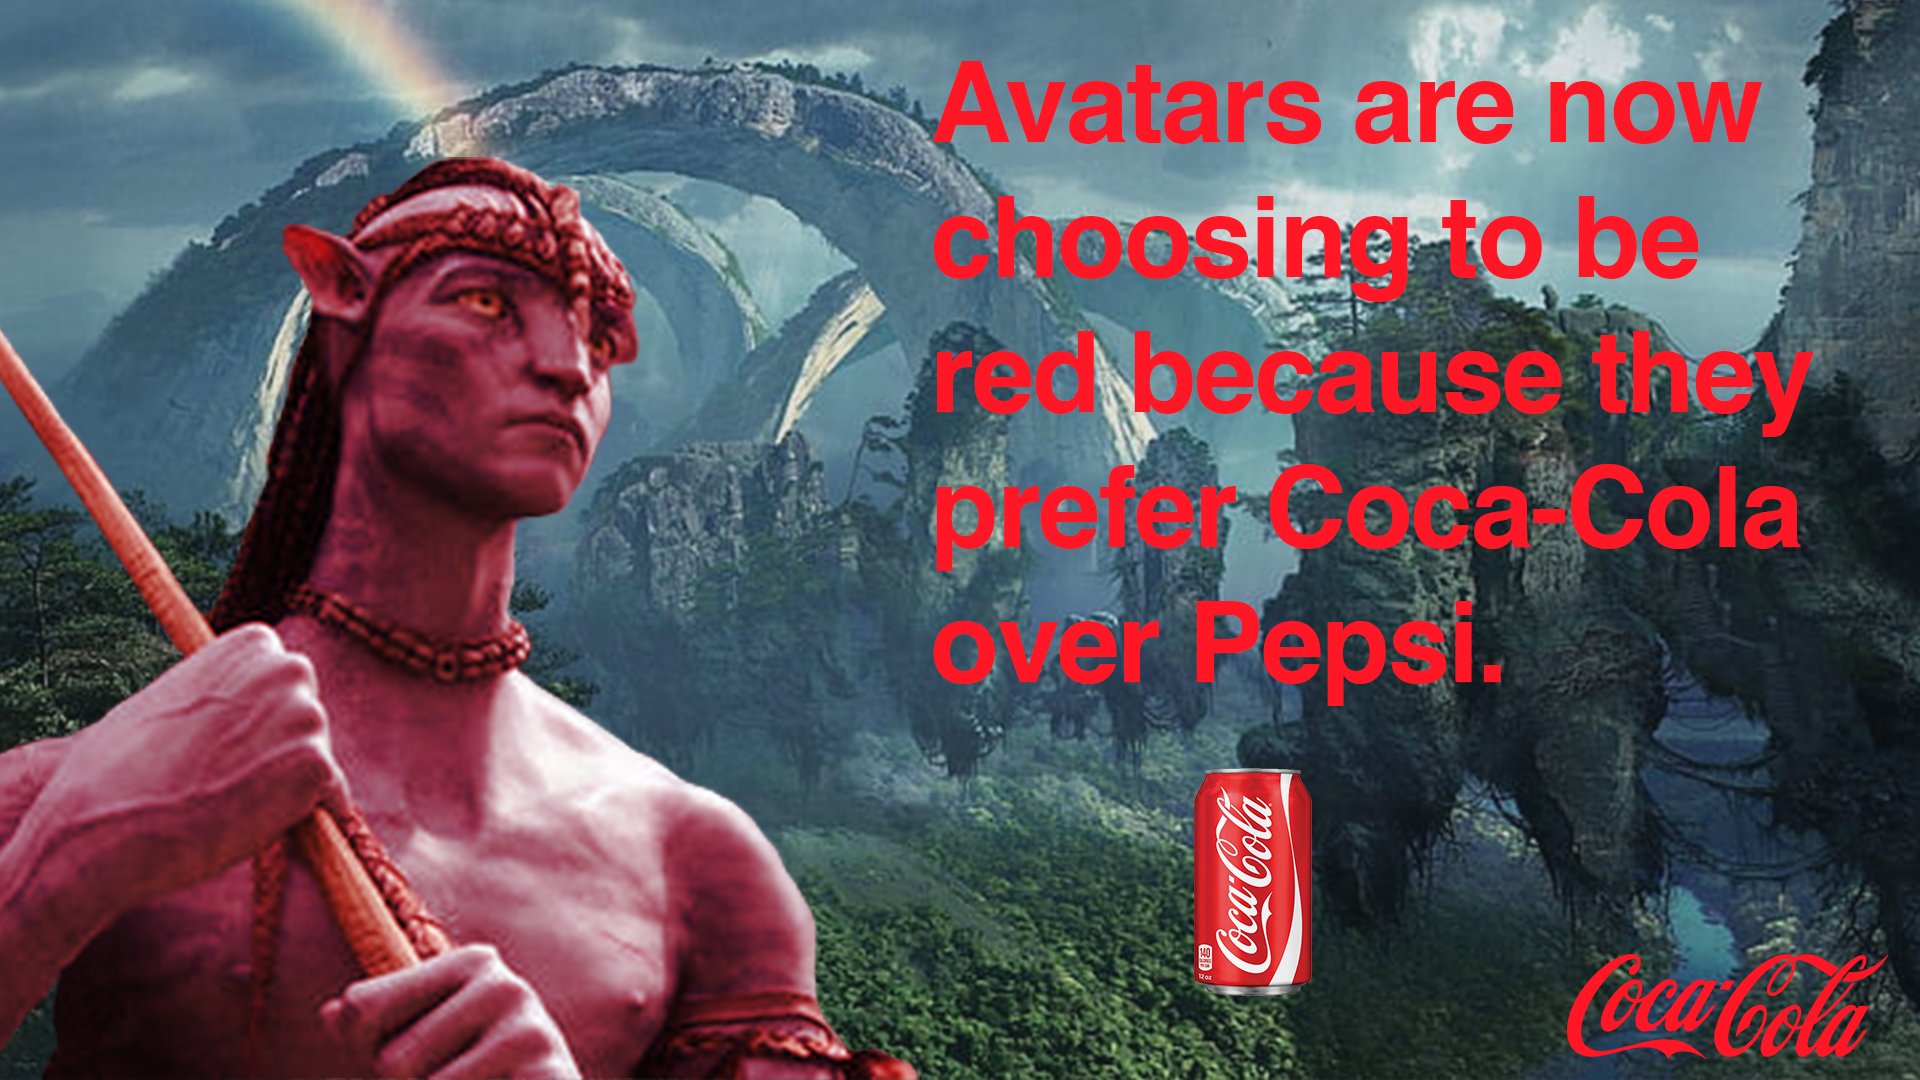 Coca-Cola Avatar Ad Concept_v1_1080p.jpg